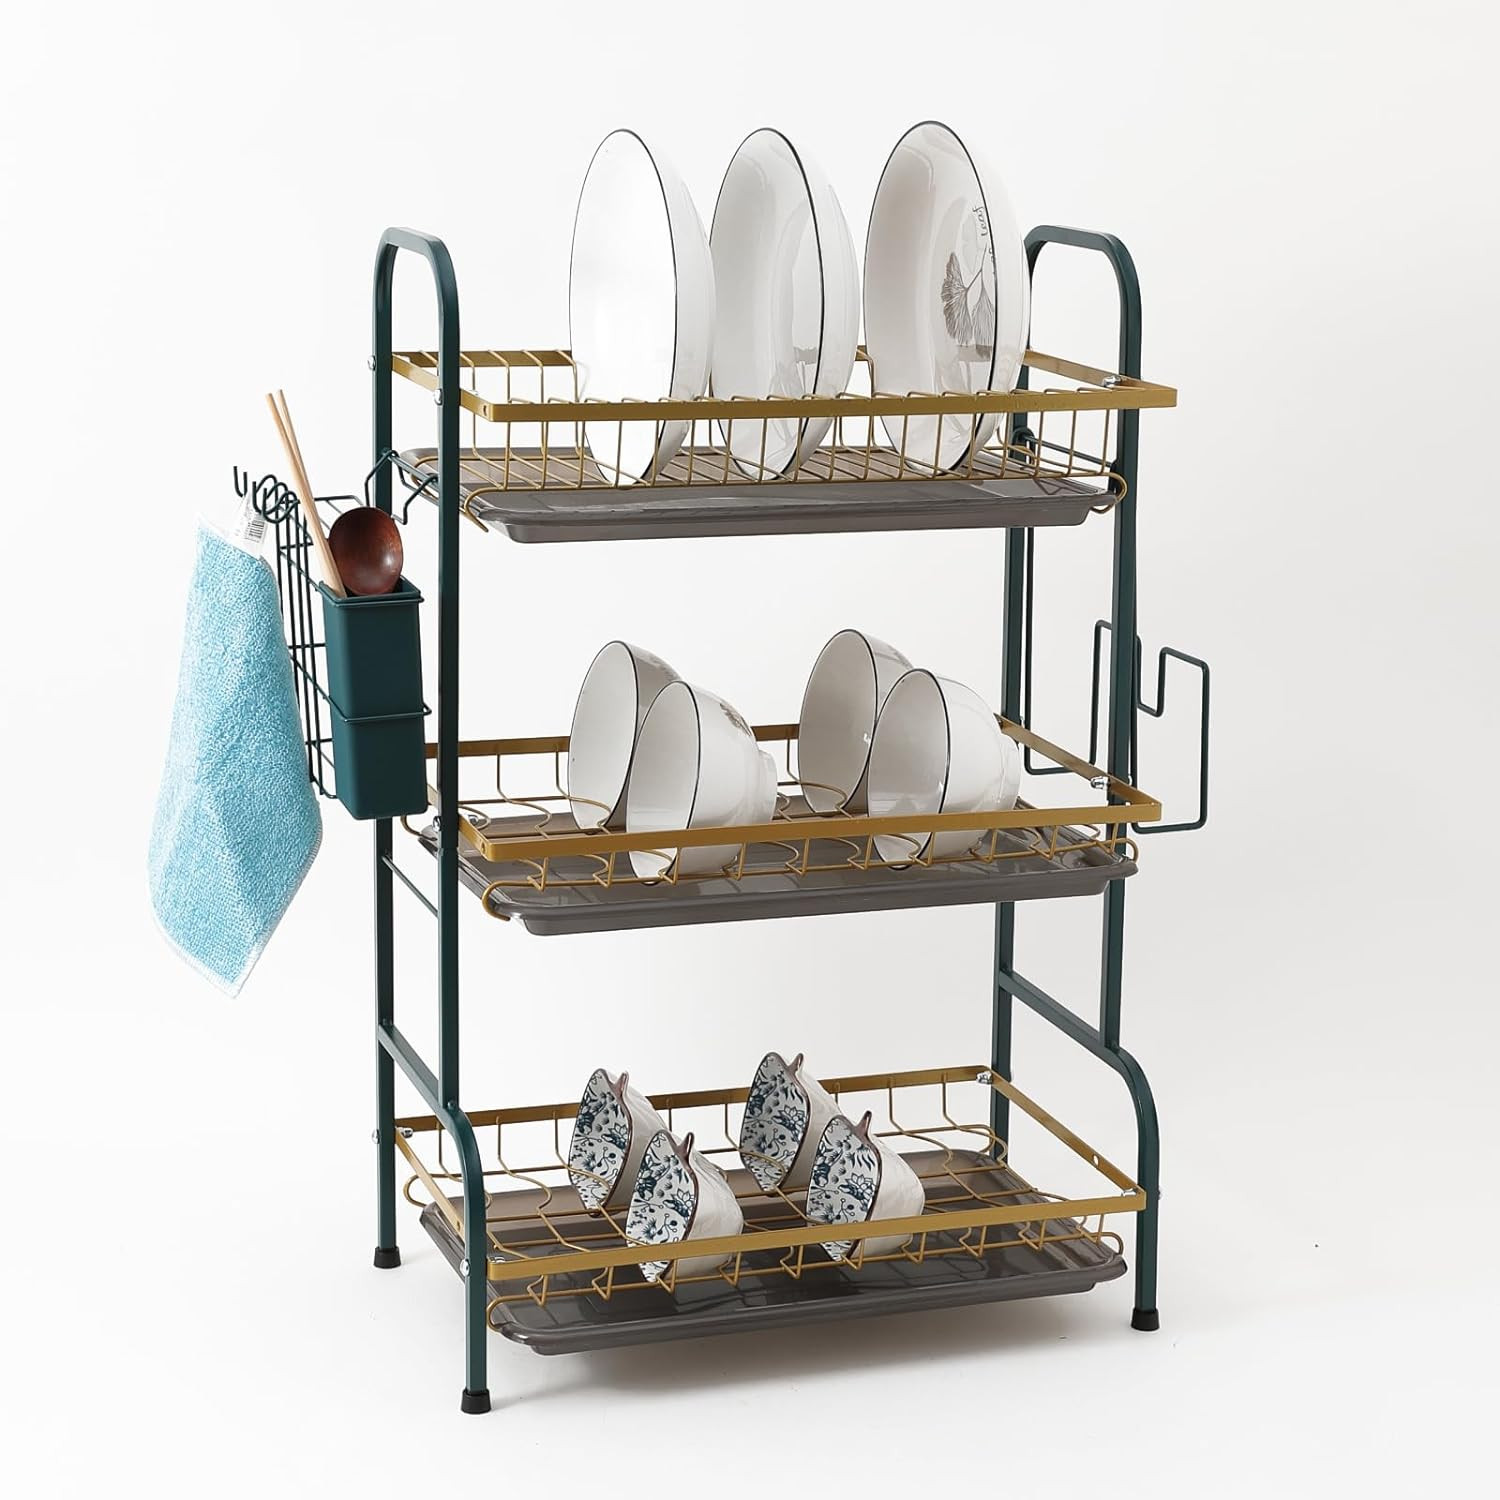 Kuber Industries 3-Layer Dish Drying Rack|Storage Rack for Kitchen Counter|Drainboard & Cutting Board Holder|Premium Utensils Basket (Gold & Dark Green)